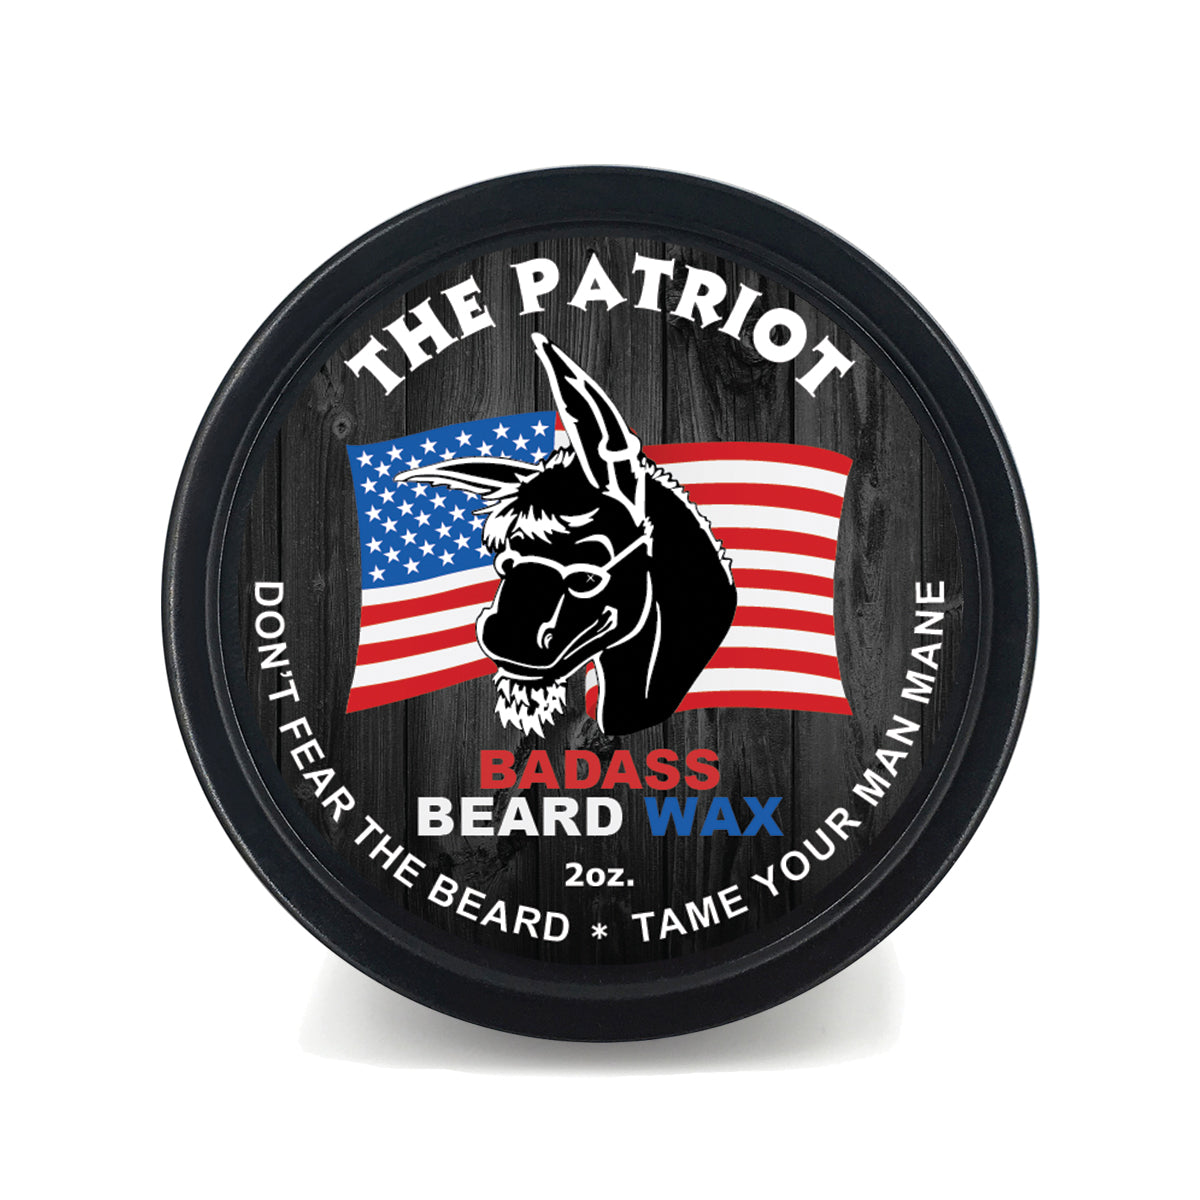 Badass Beard Wax - The Patriot